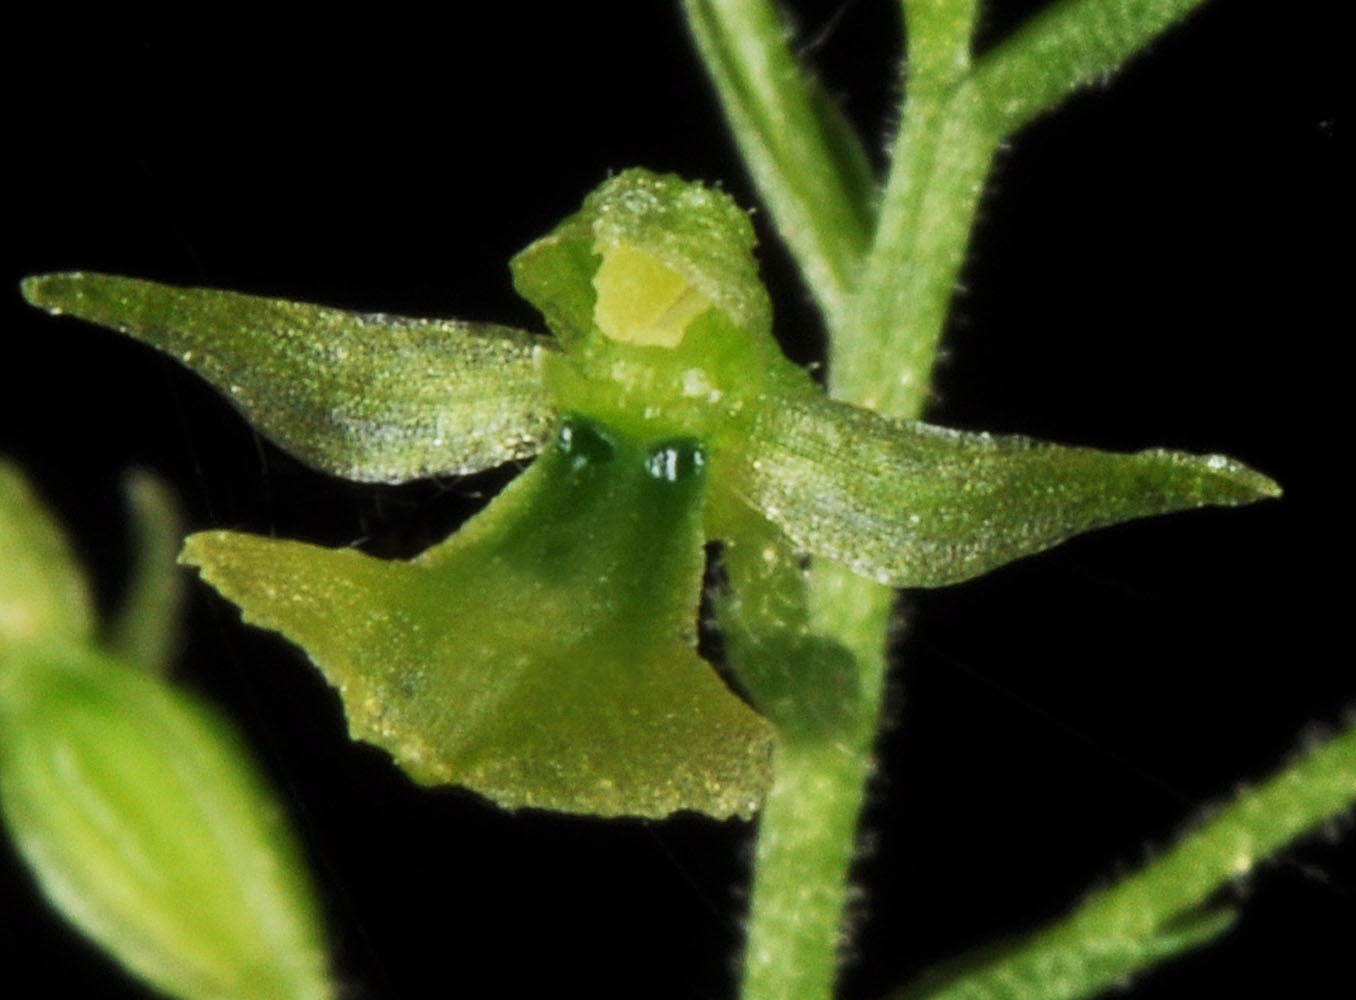 Flora of Eastern Washington Image: Neottia banksiana